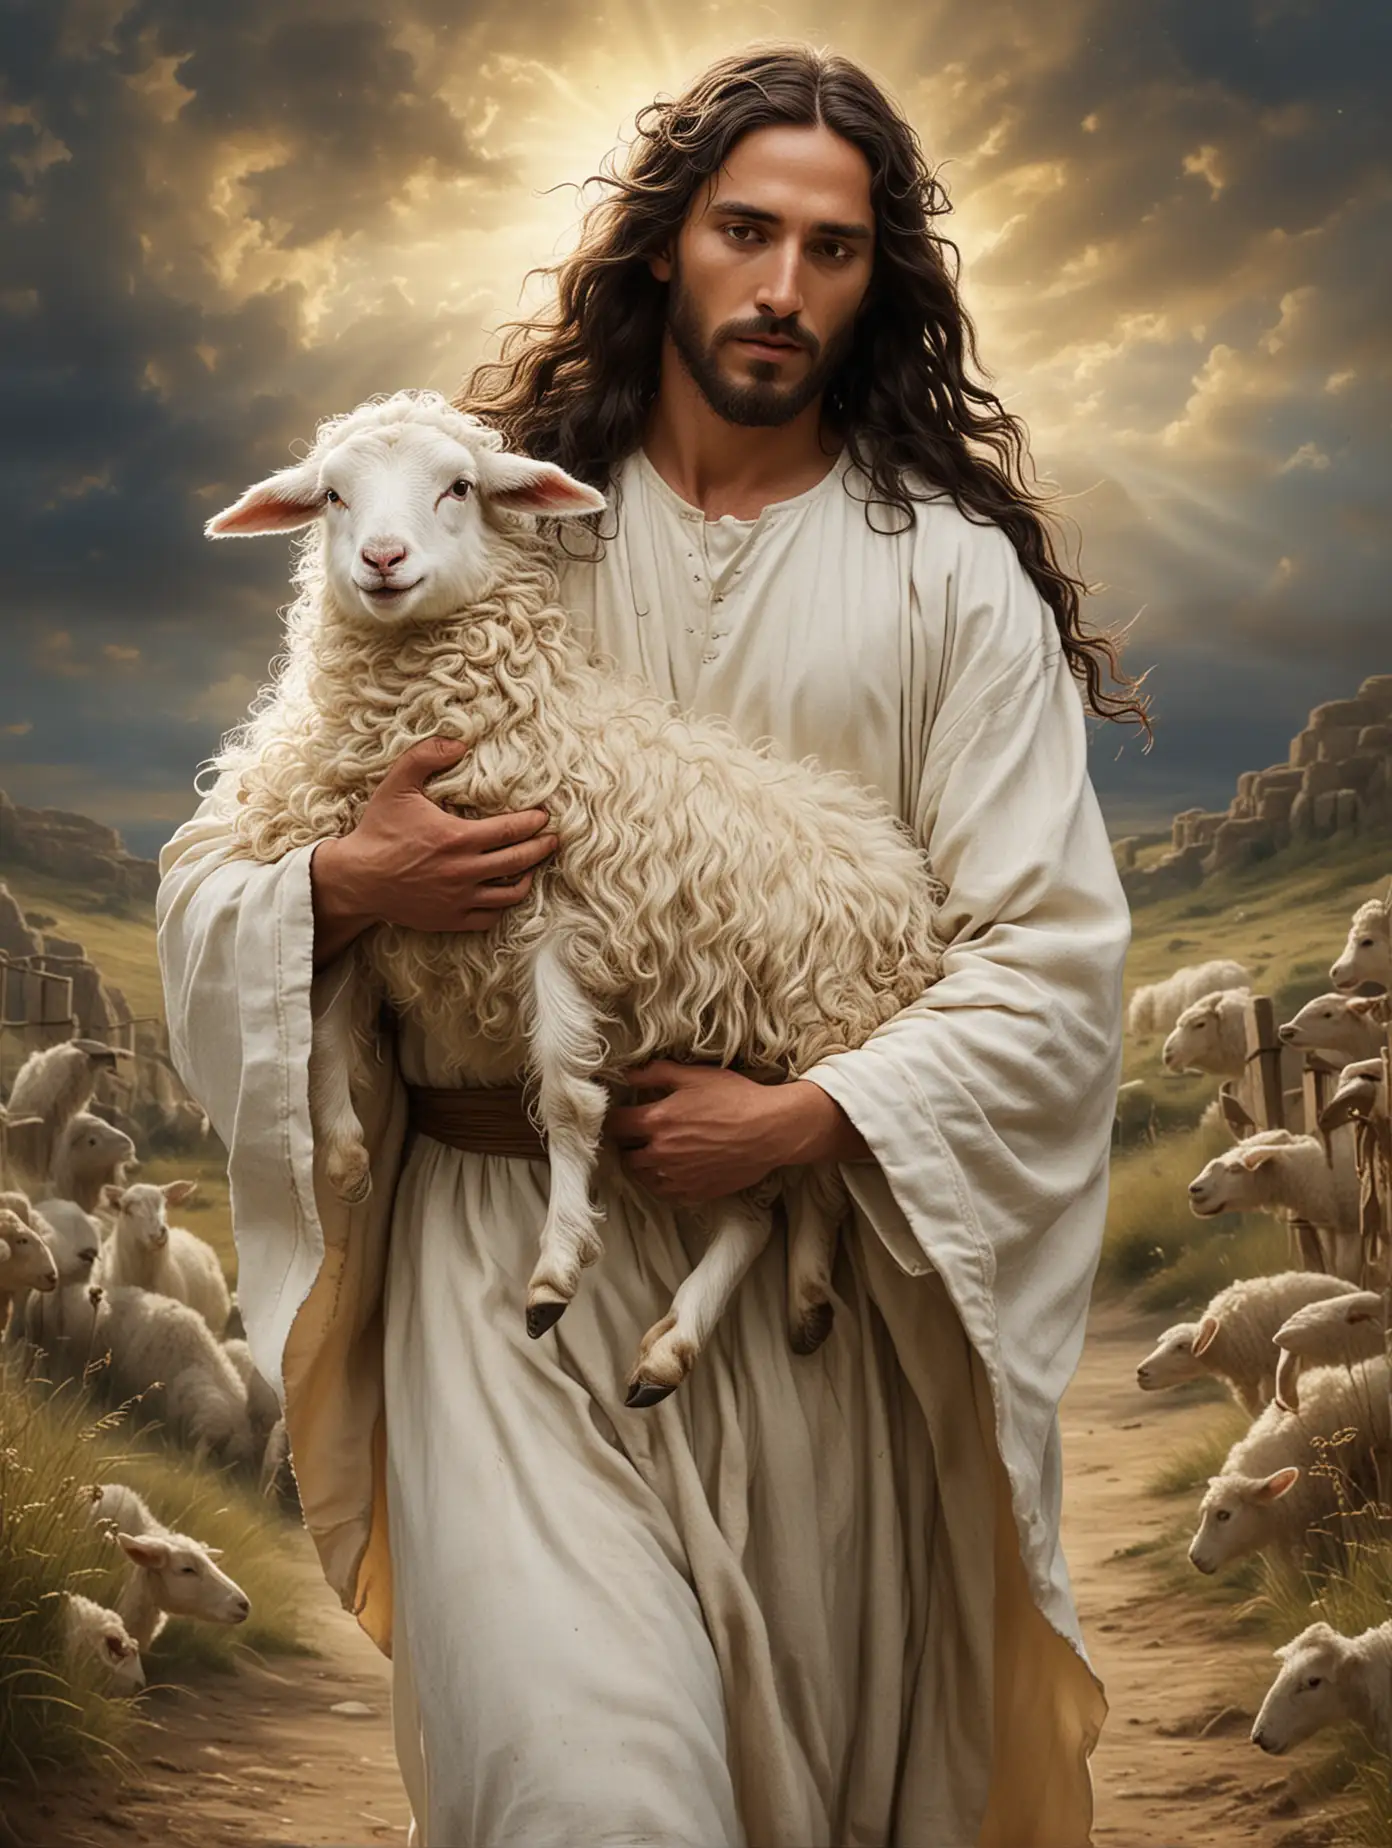 Messiah with Dark Wavy Hair Cradling a Lamb